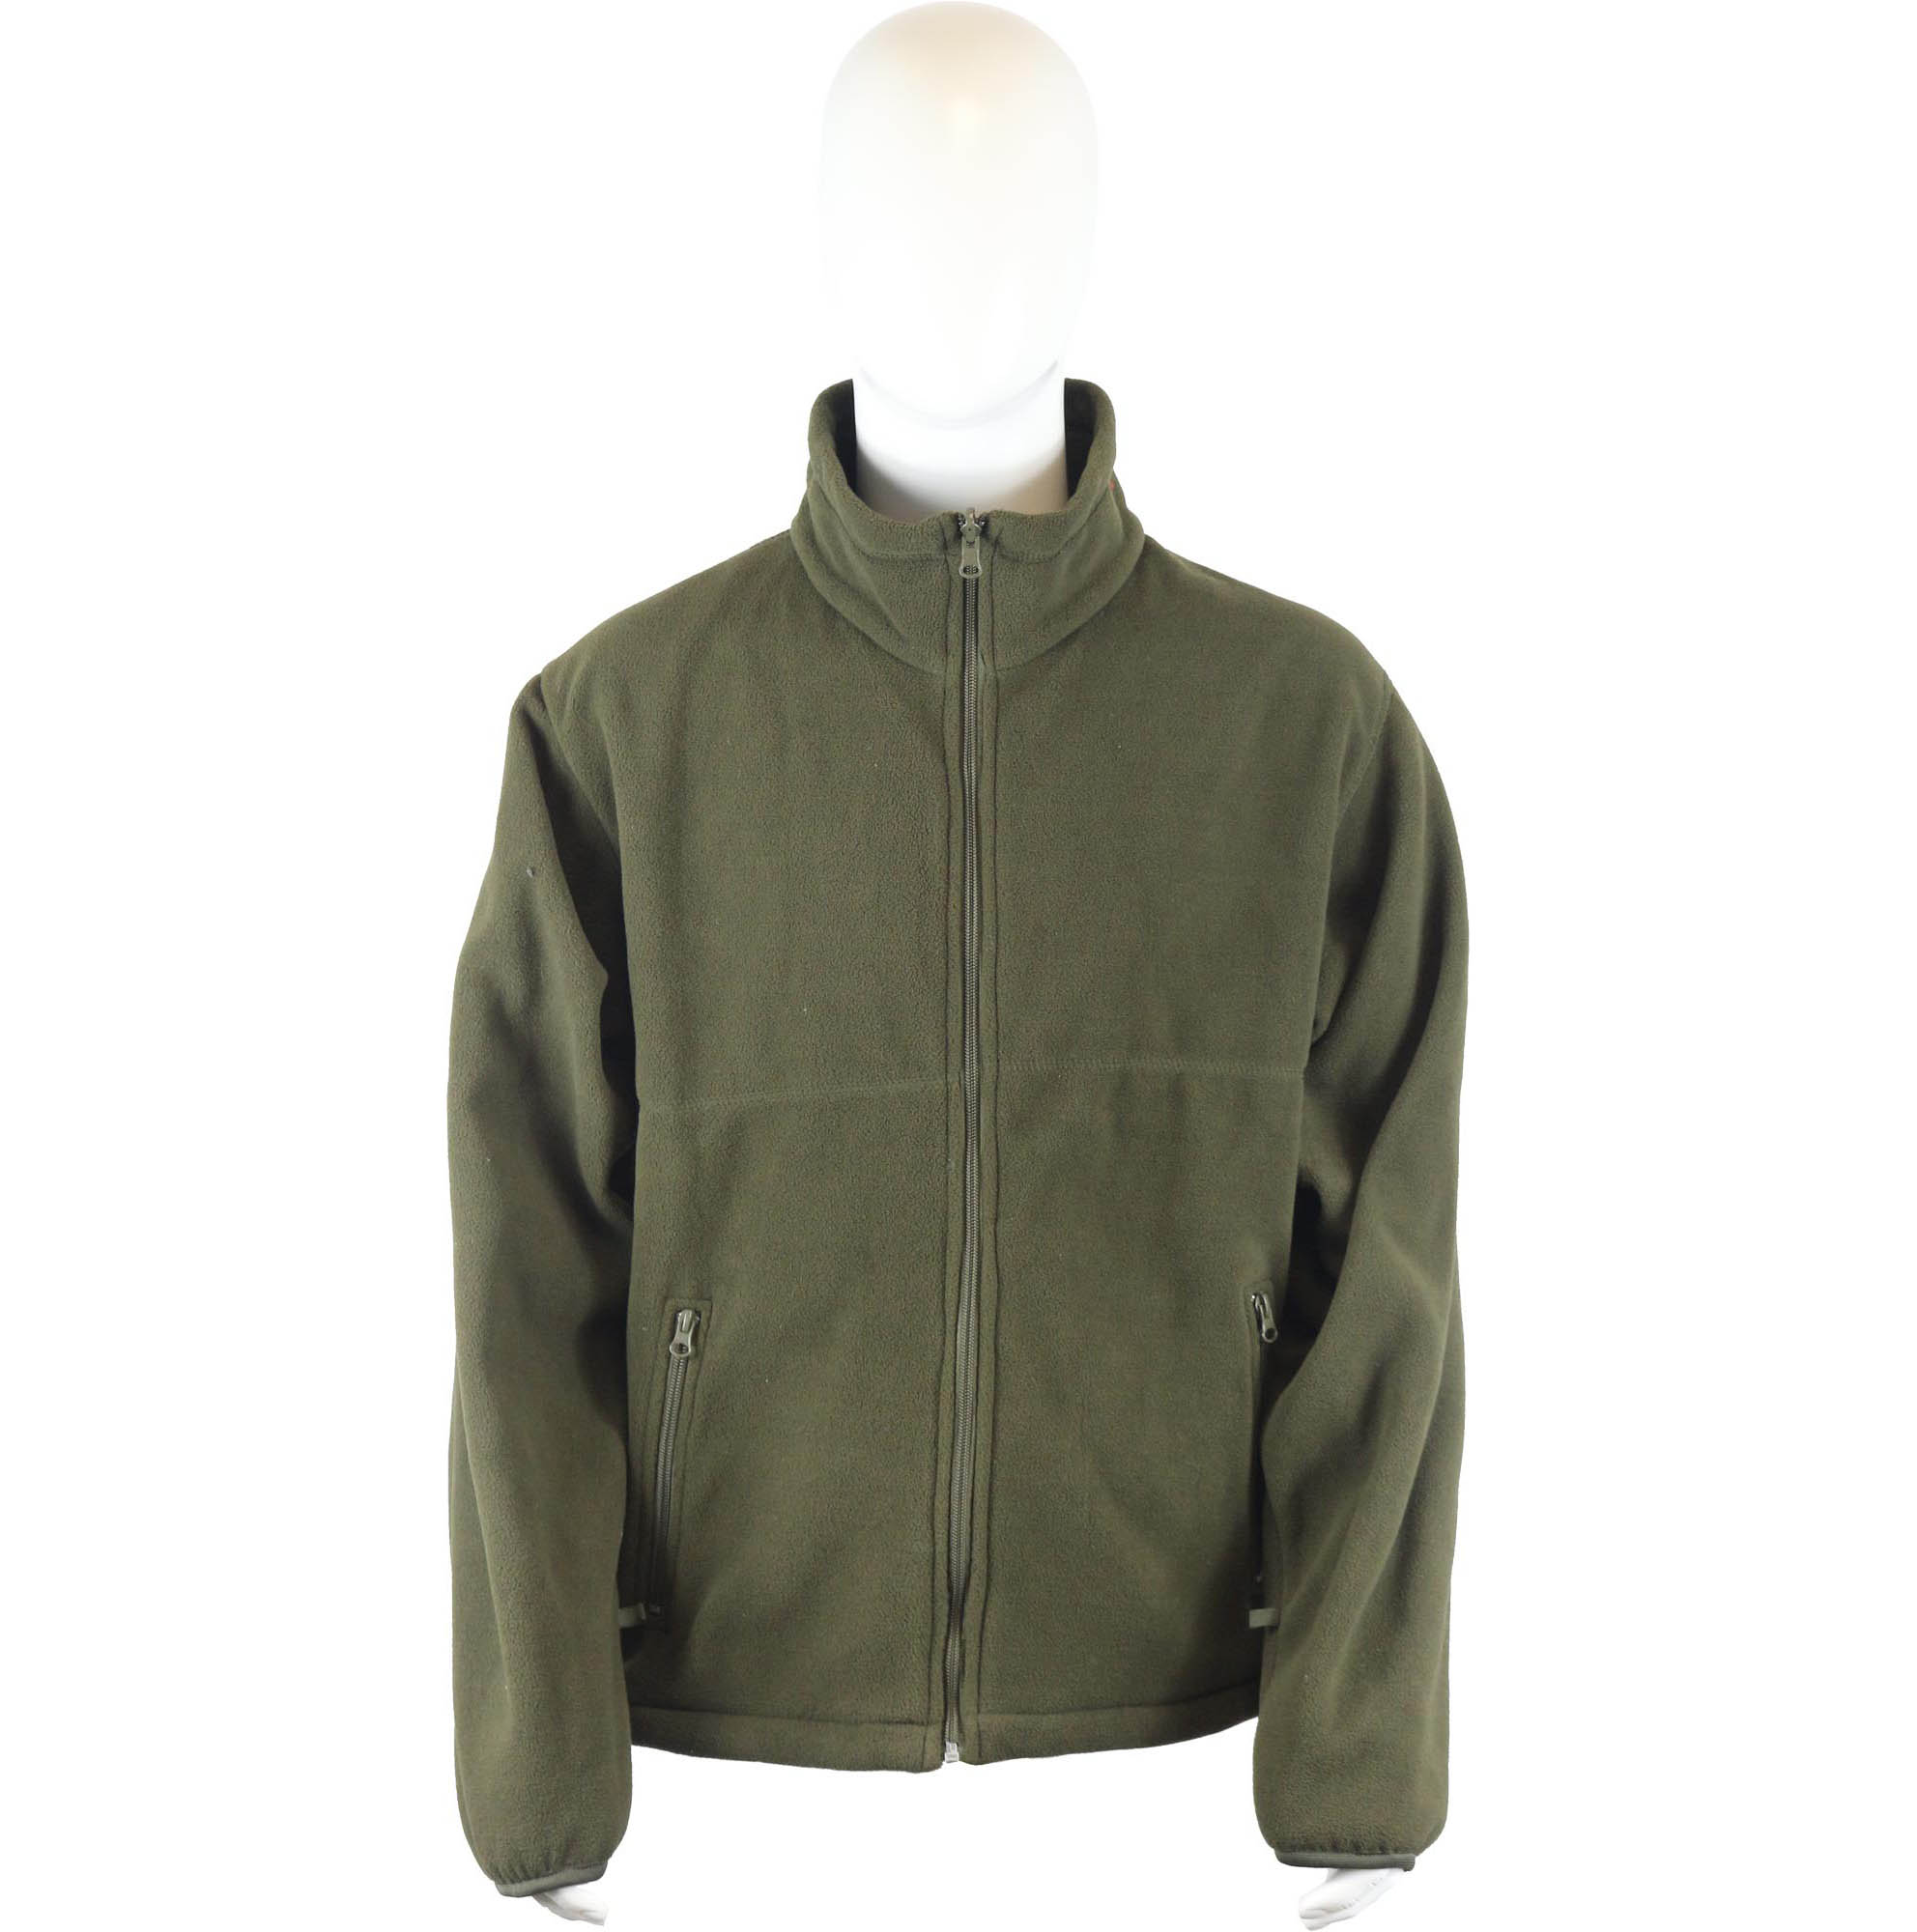 High Quality Army Winter Fleece Jacket - Buy Army Fleece Jacket, Winter ...